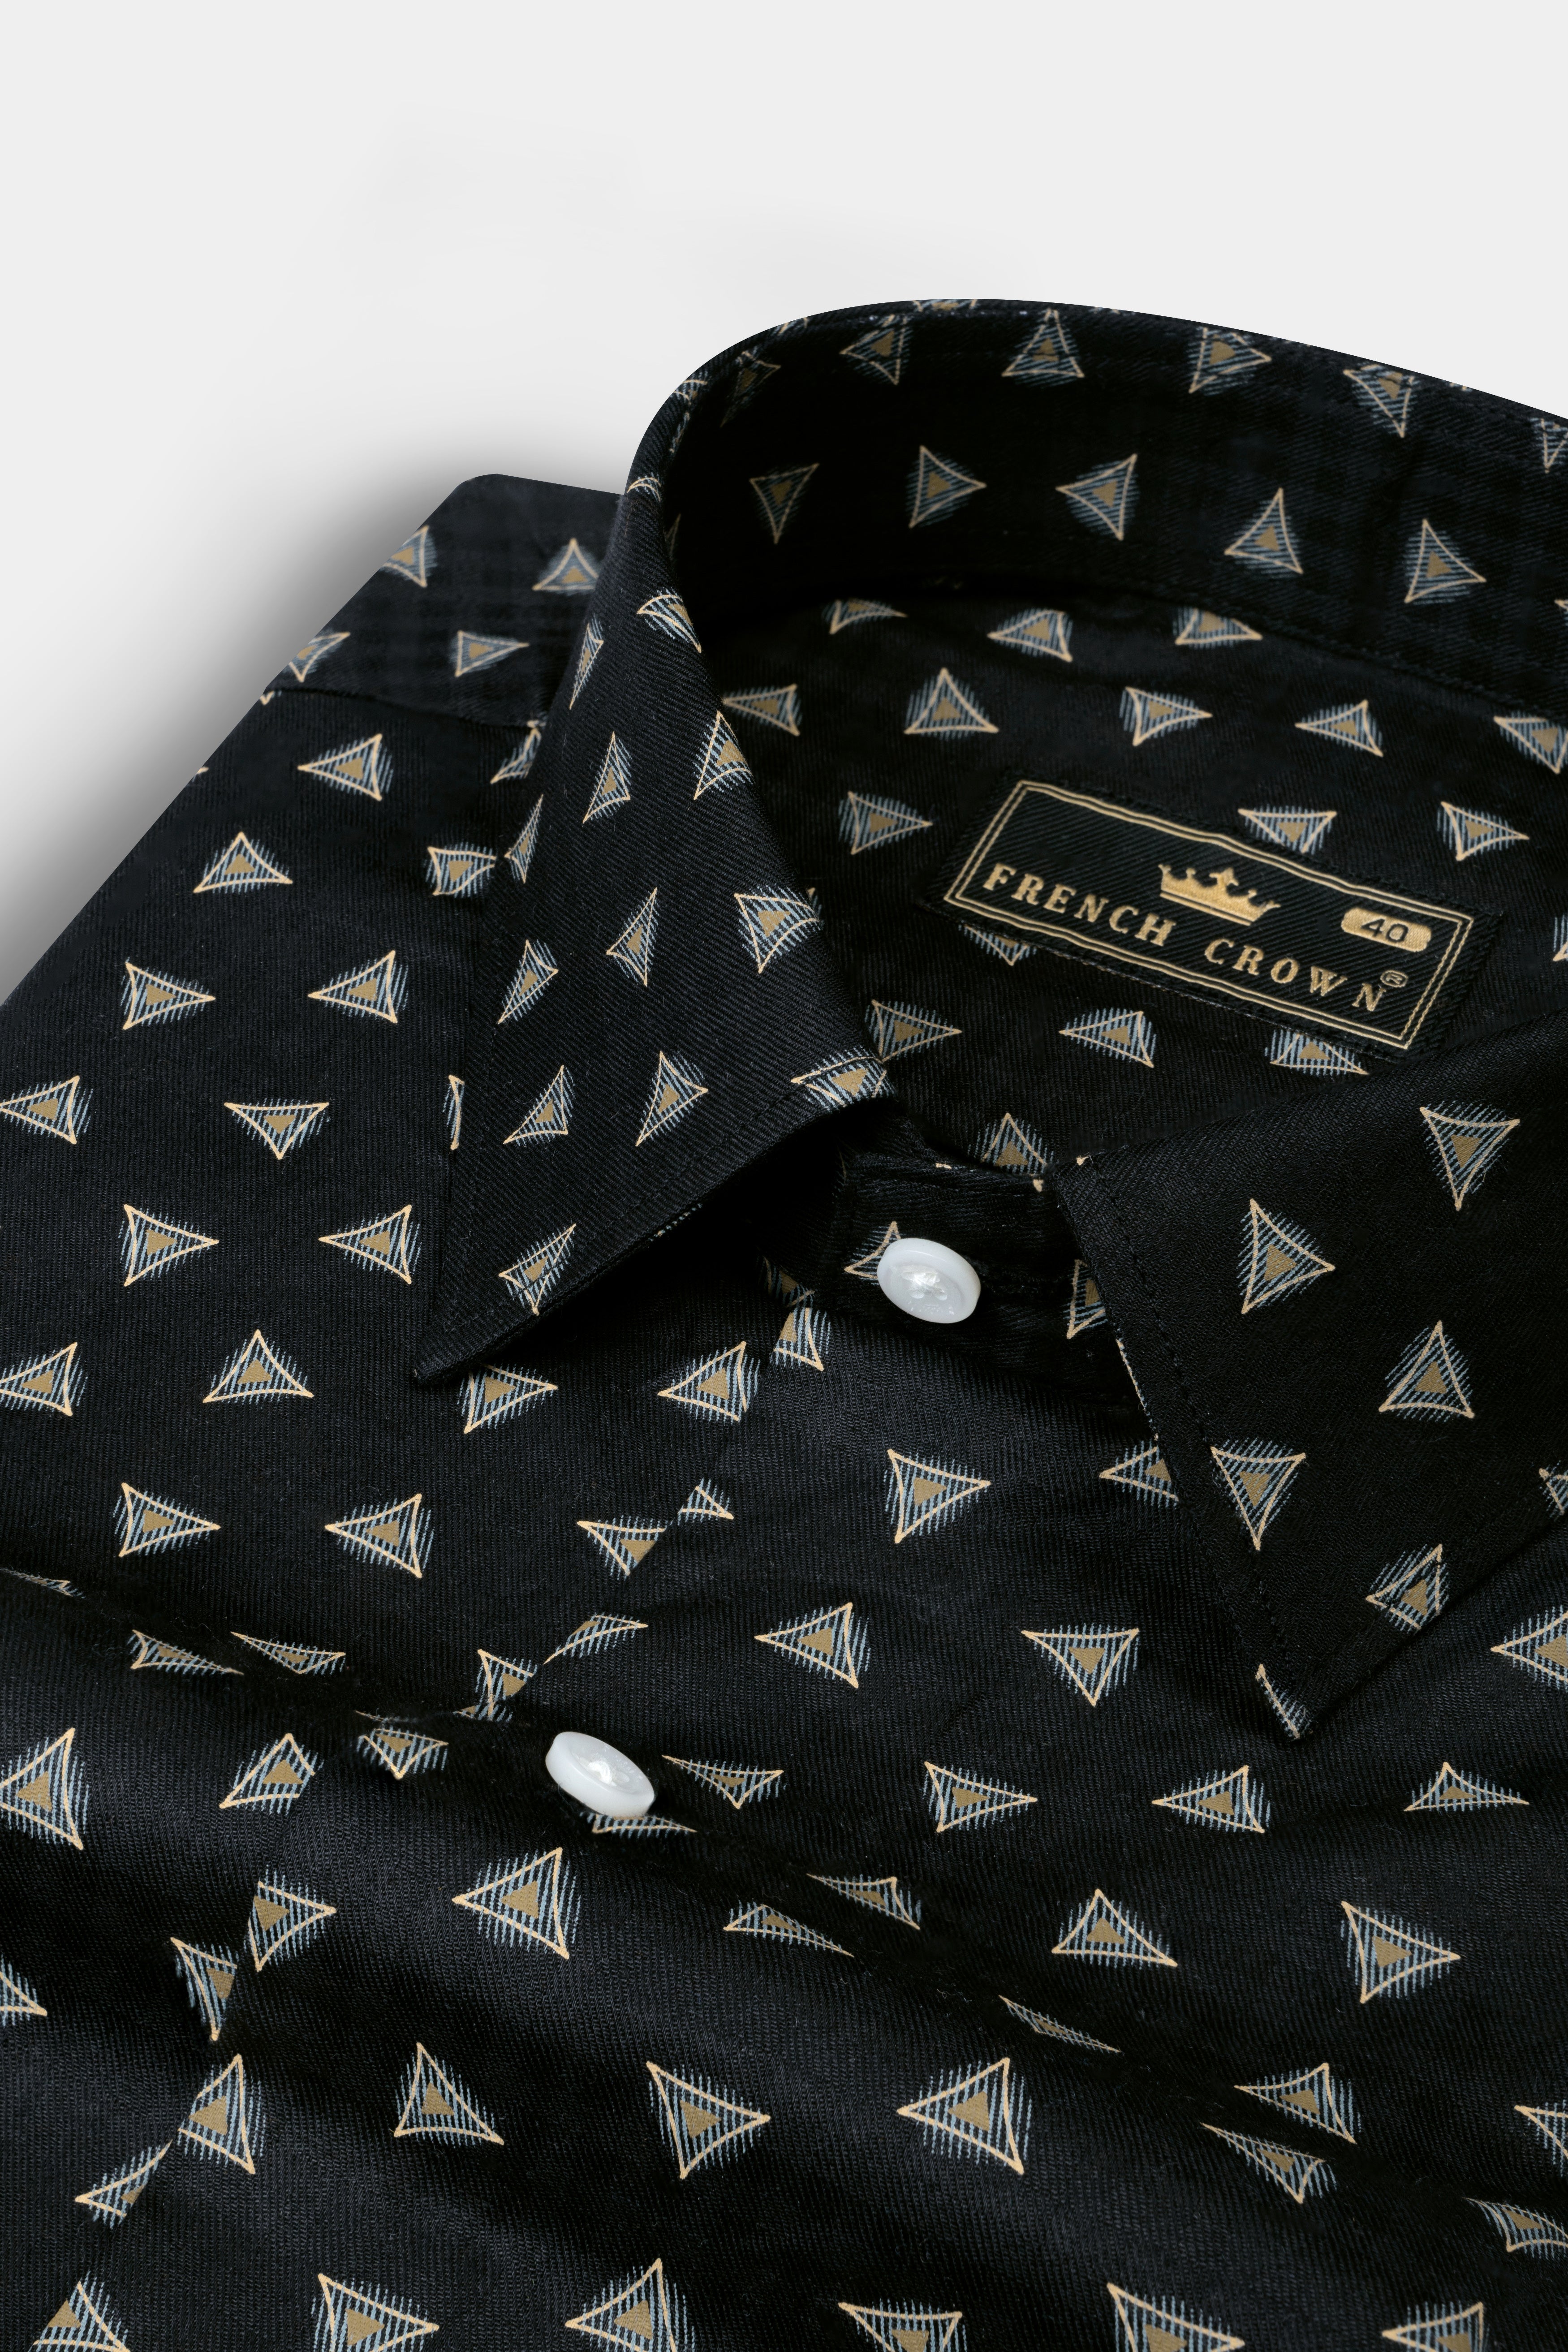 Jade Black Triangles printed Twill Premium Cotton Shirt